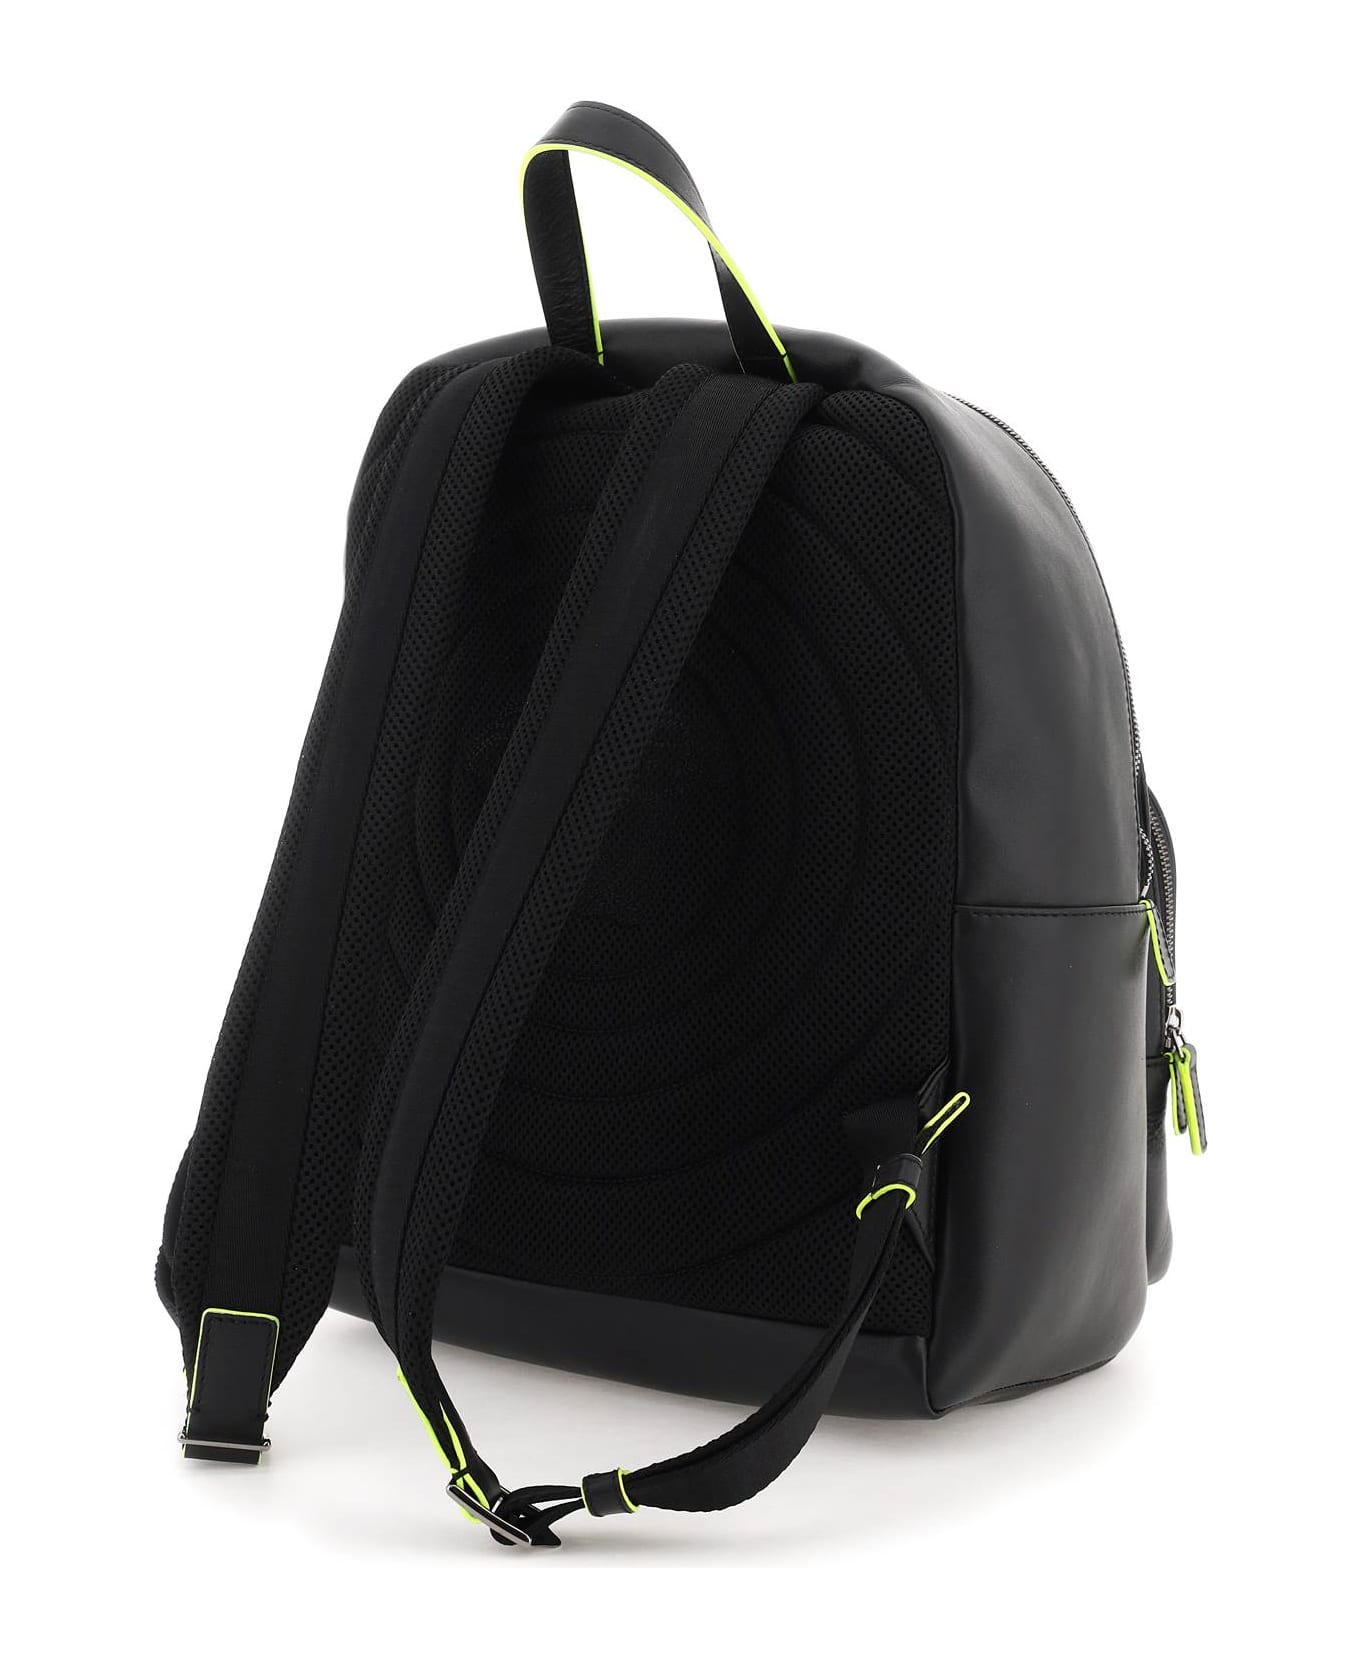 Versace Medusa Biggie Backpack - BLACK FLUO YELLOW RUTHENI (Black)